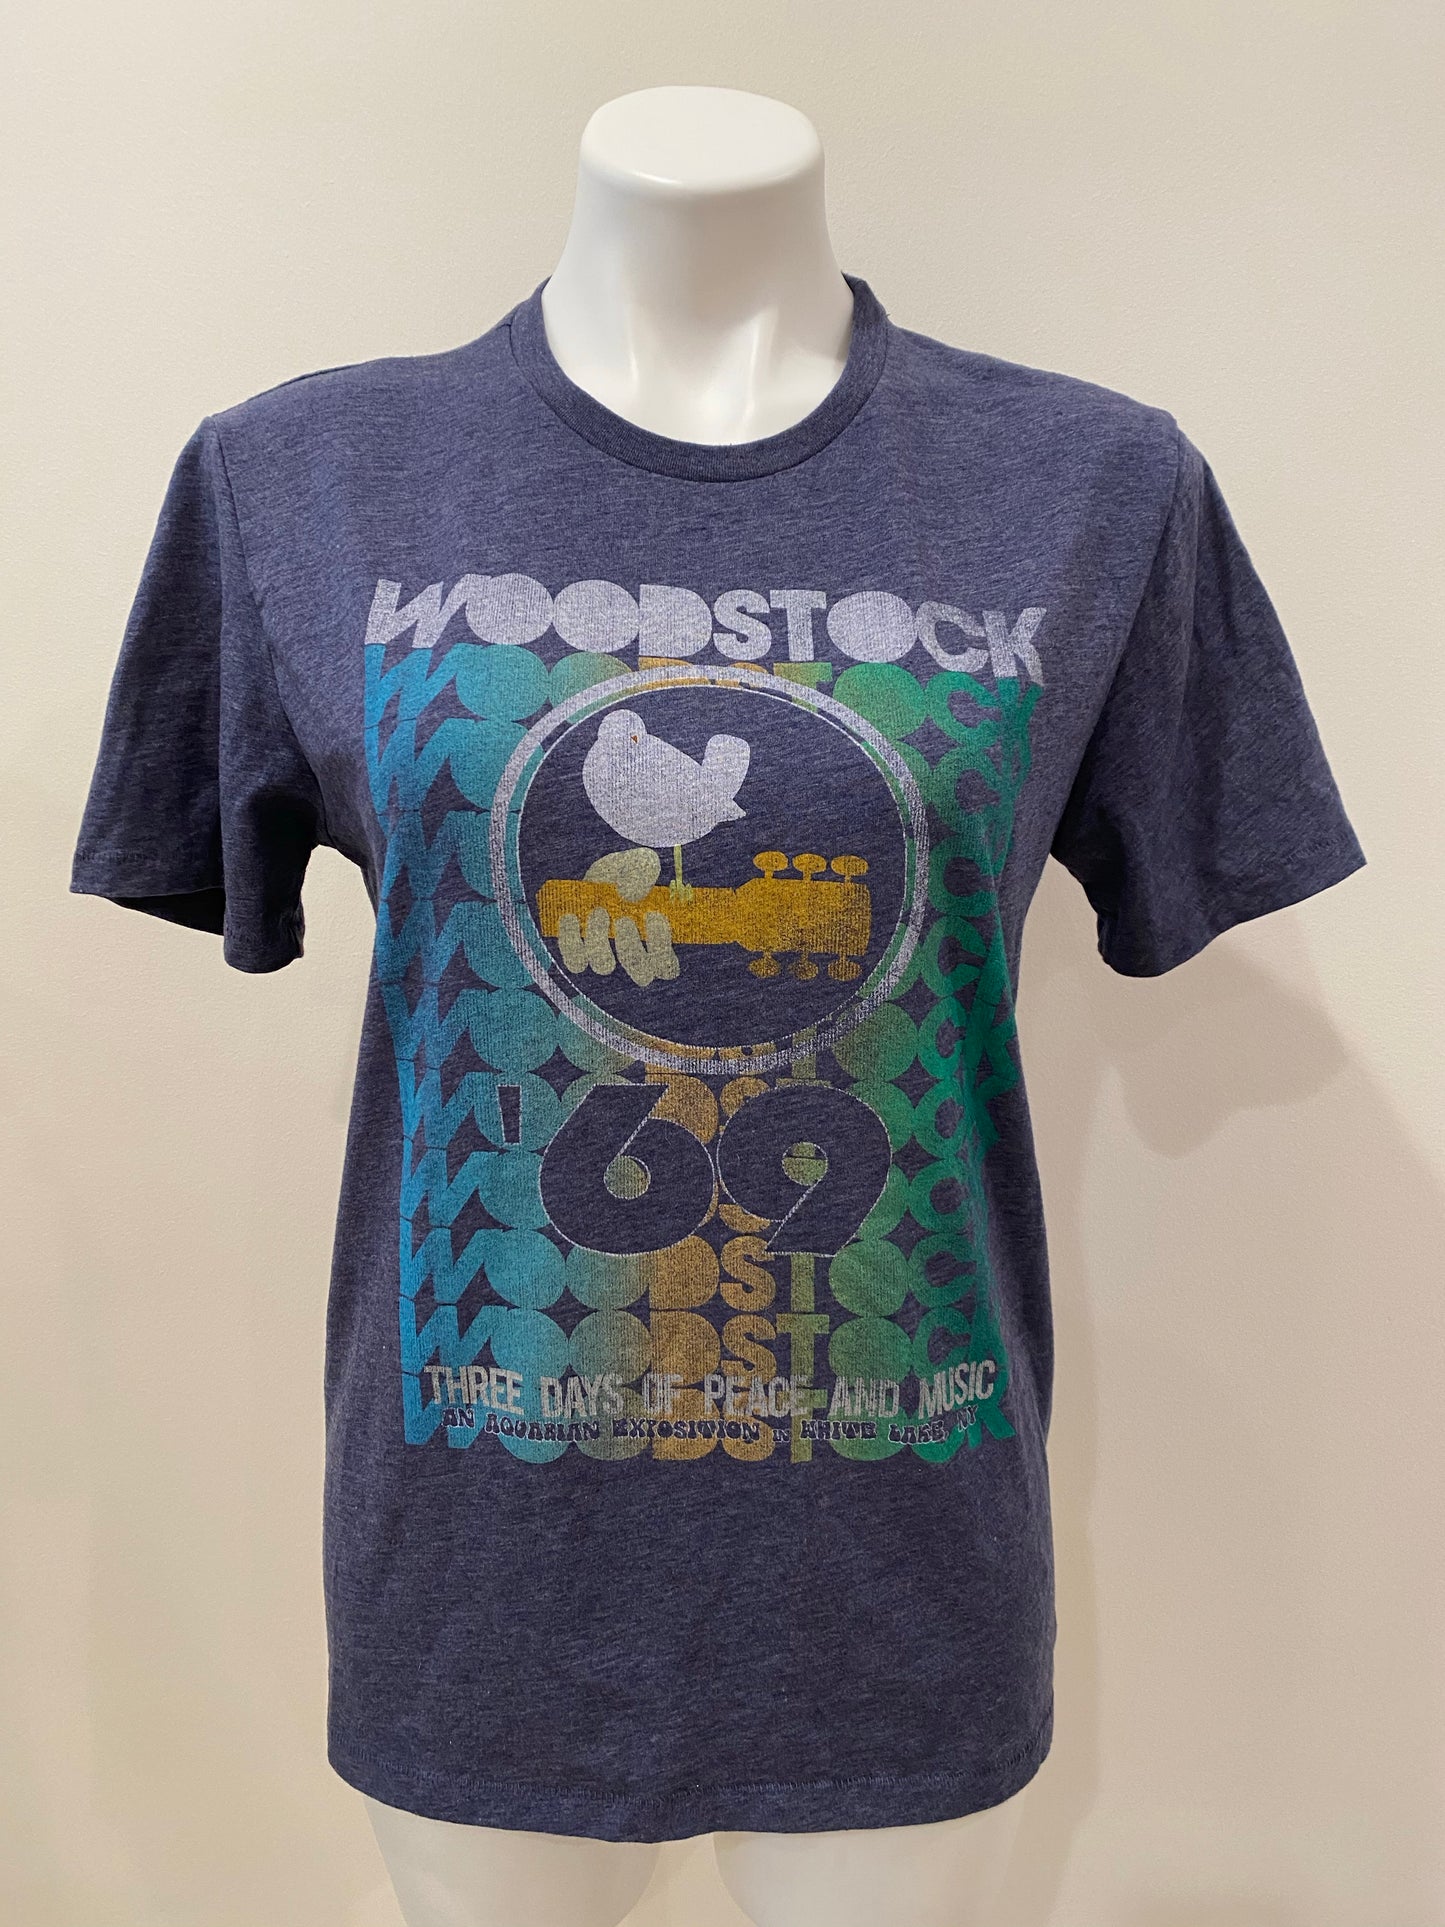 Woodstock Reprint 1969